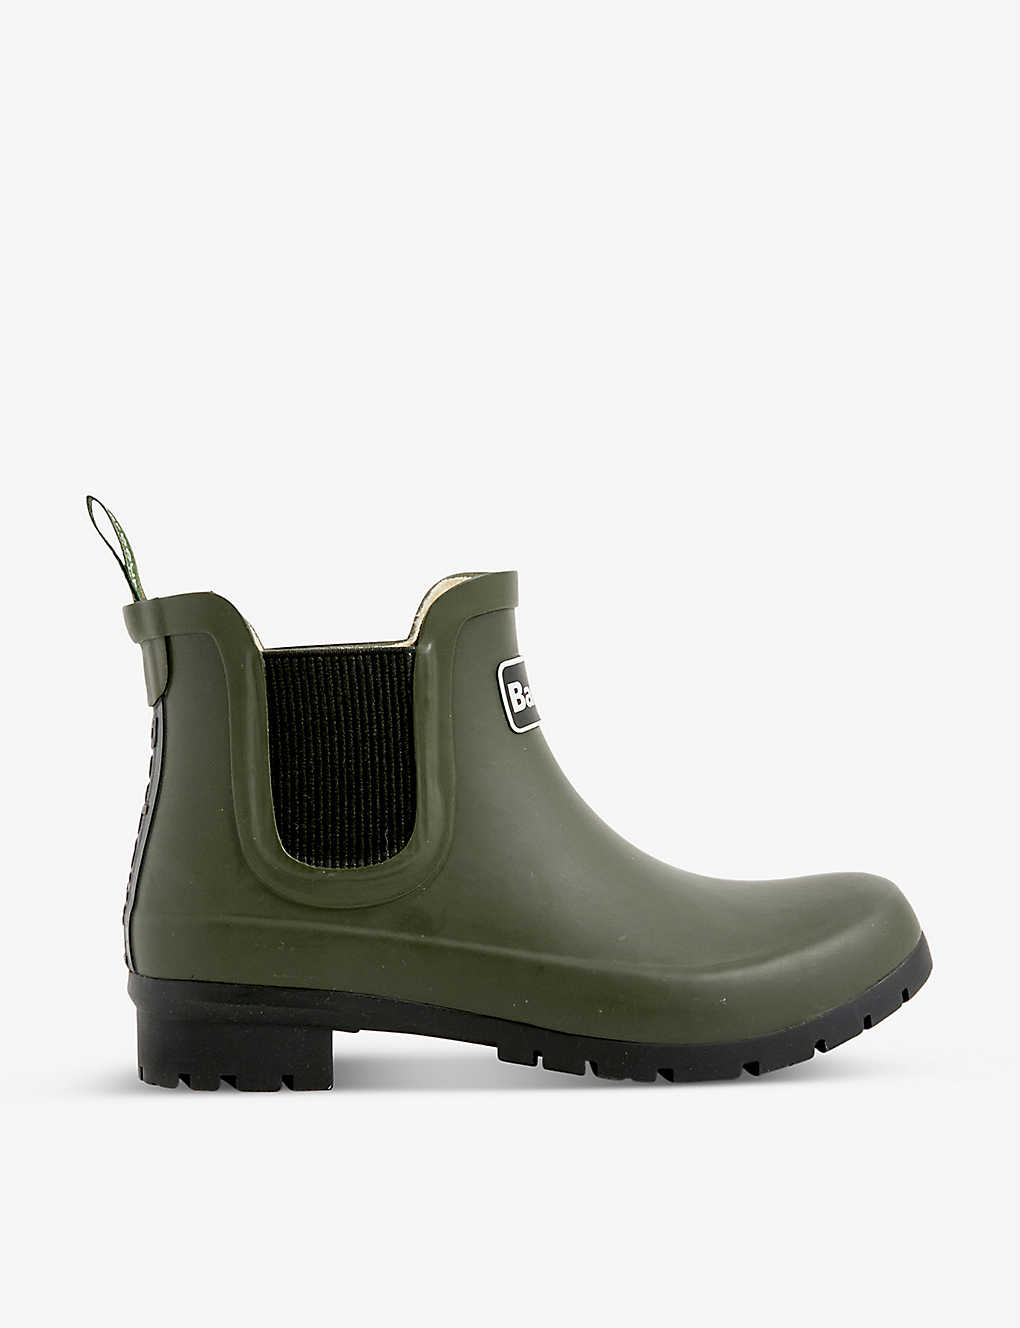 selfridges.com | Speyside branded rubber wellington boots